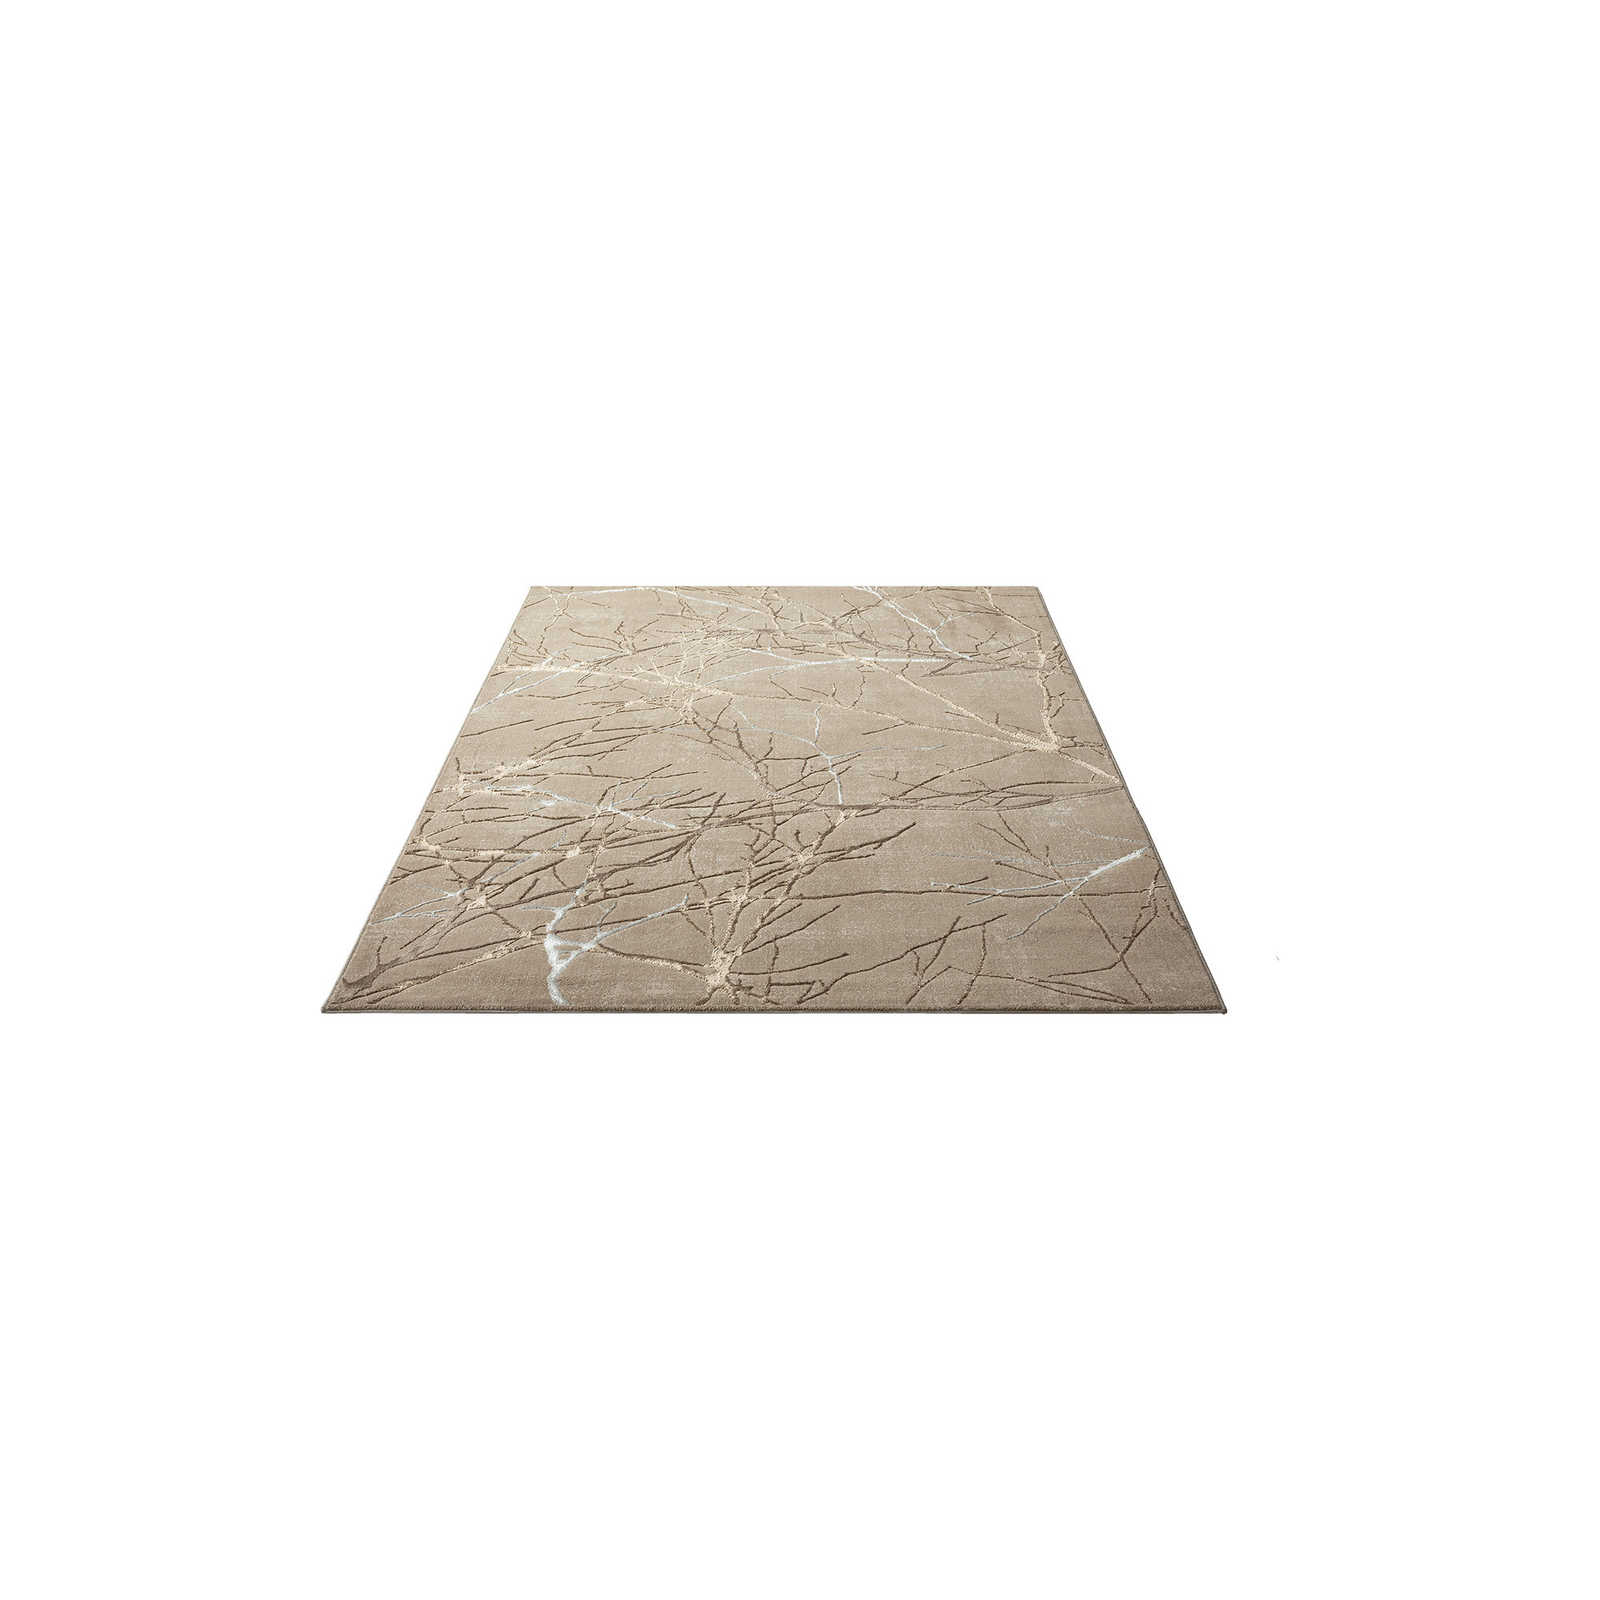 Pile carpet in soft beige - 170 x 120 cm
